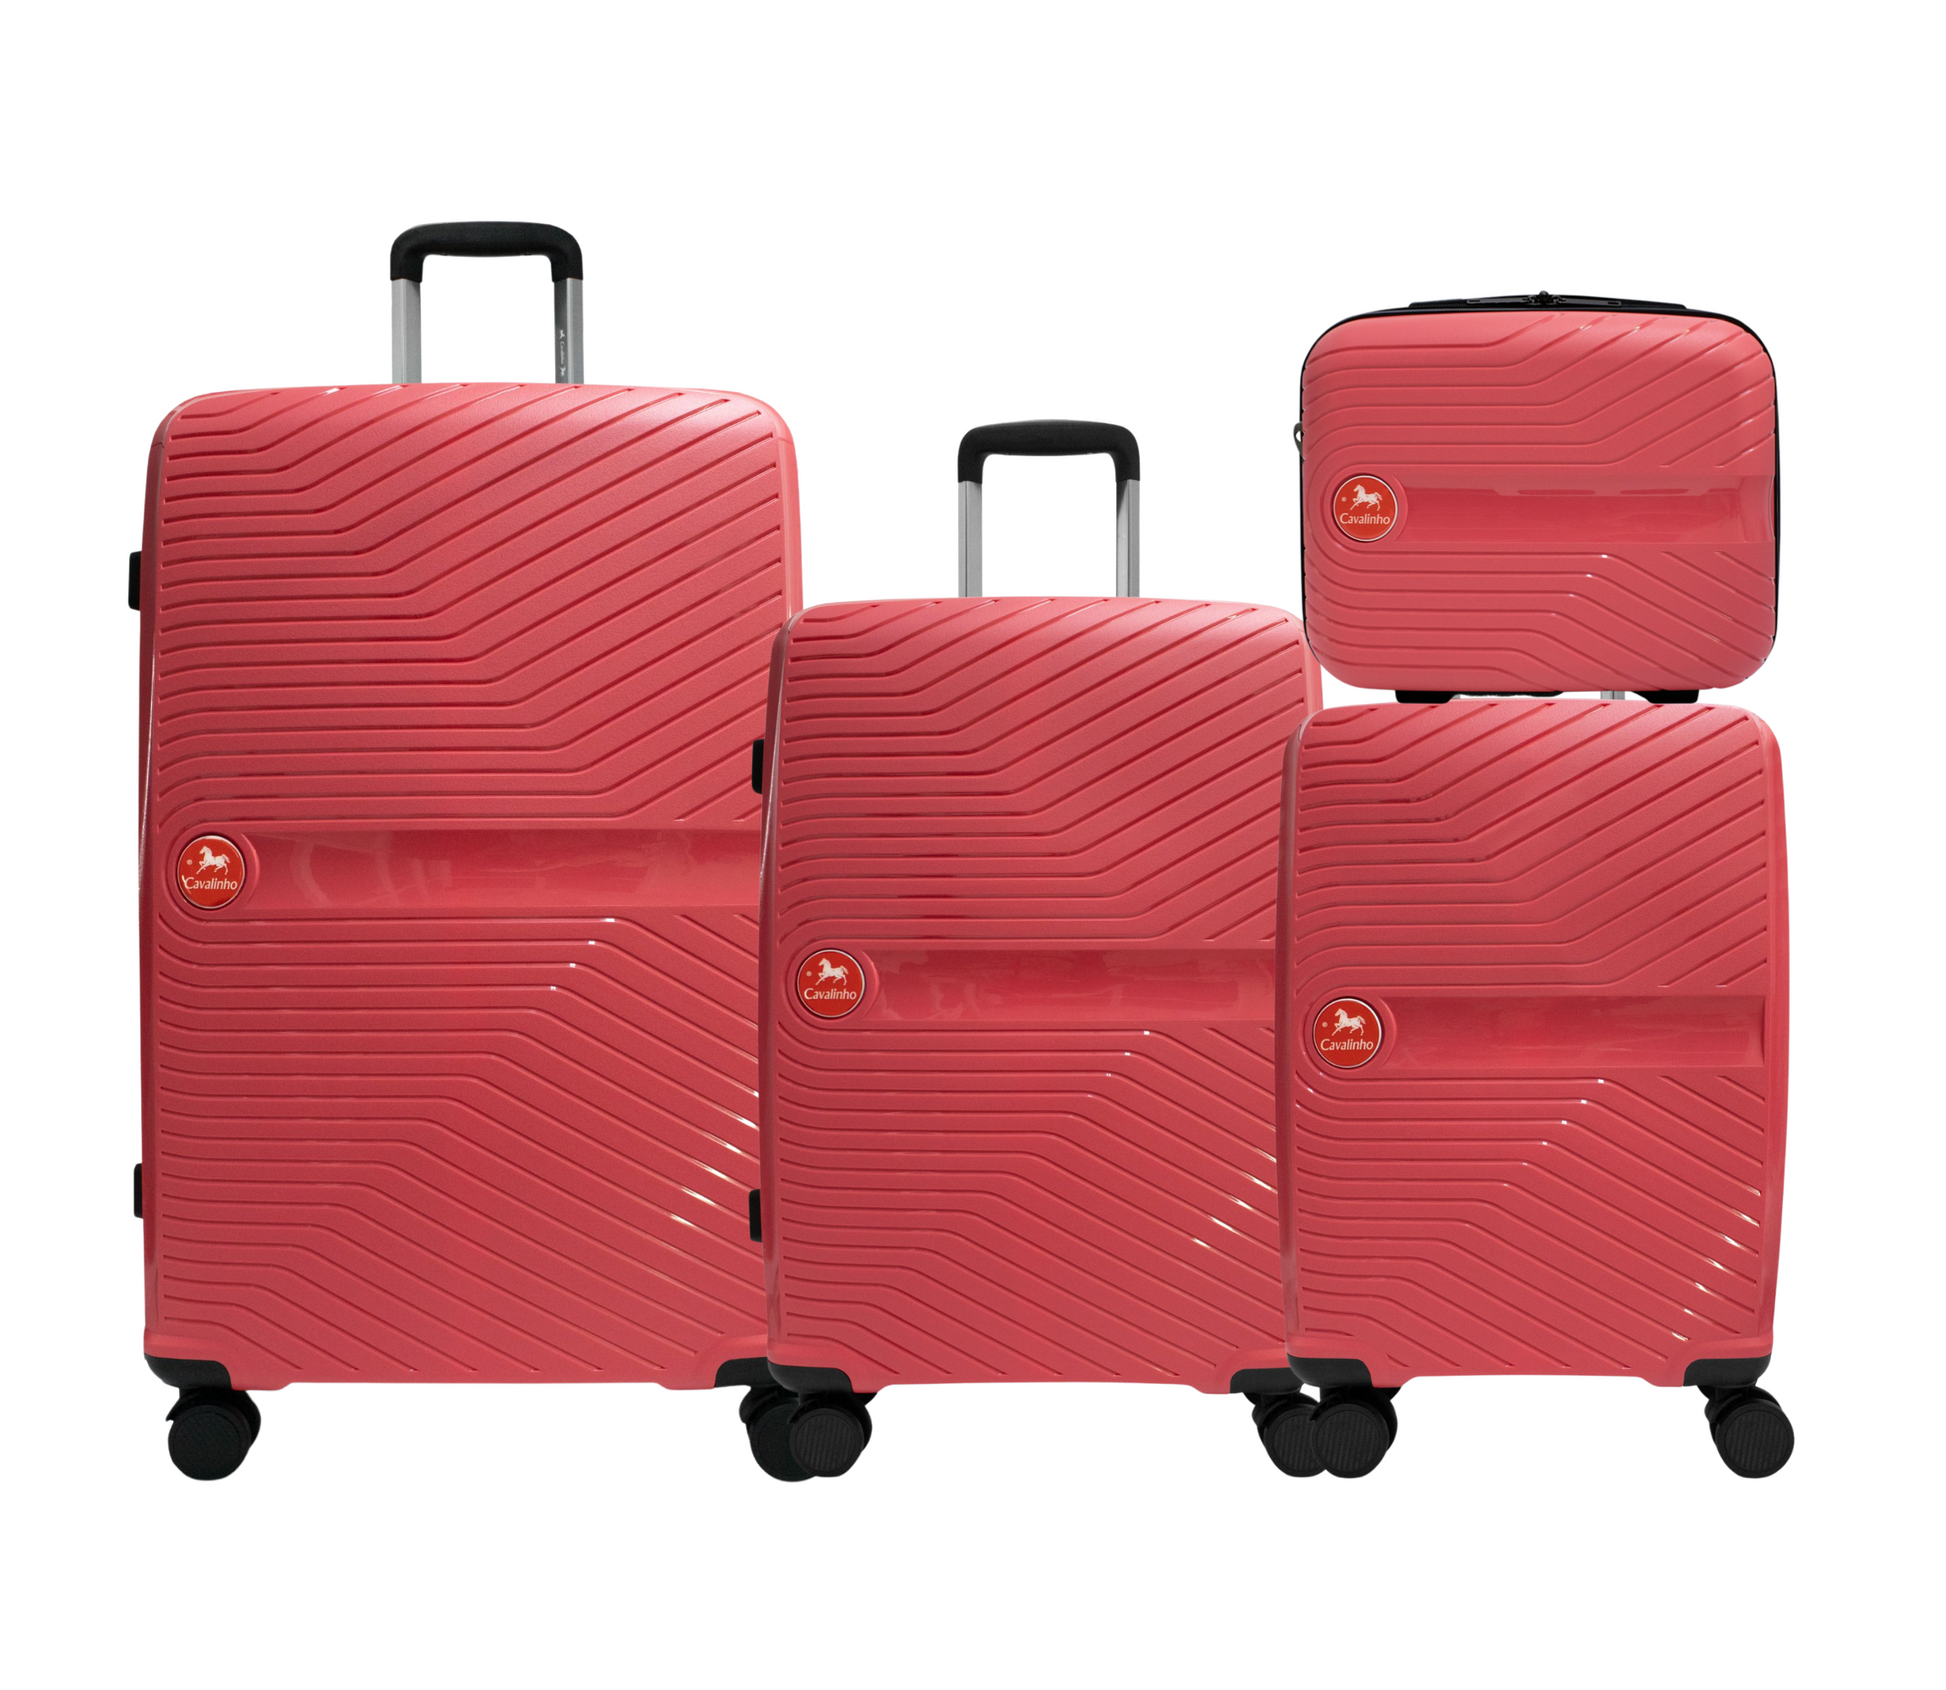 Cavalinho Canada & USA 4 Piece Set of Colorful Hardside Luggage (15", 19", 24", 28") - Coral - 68020004.27.S4_1